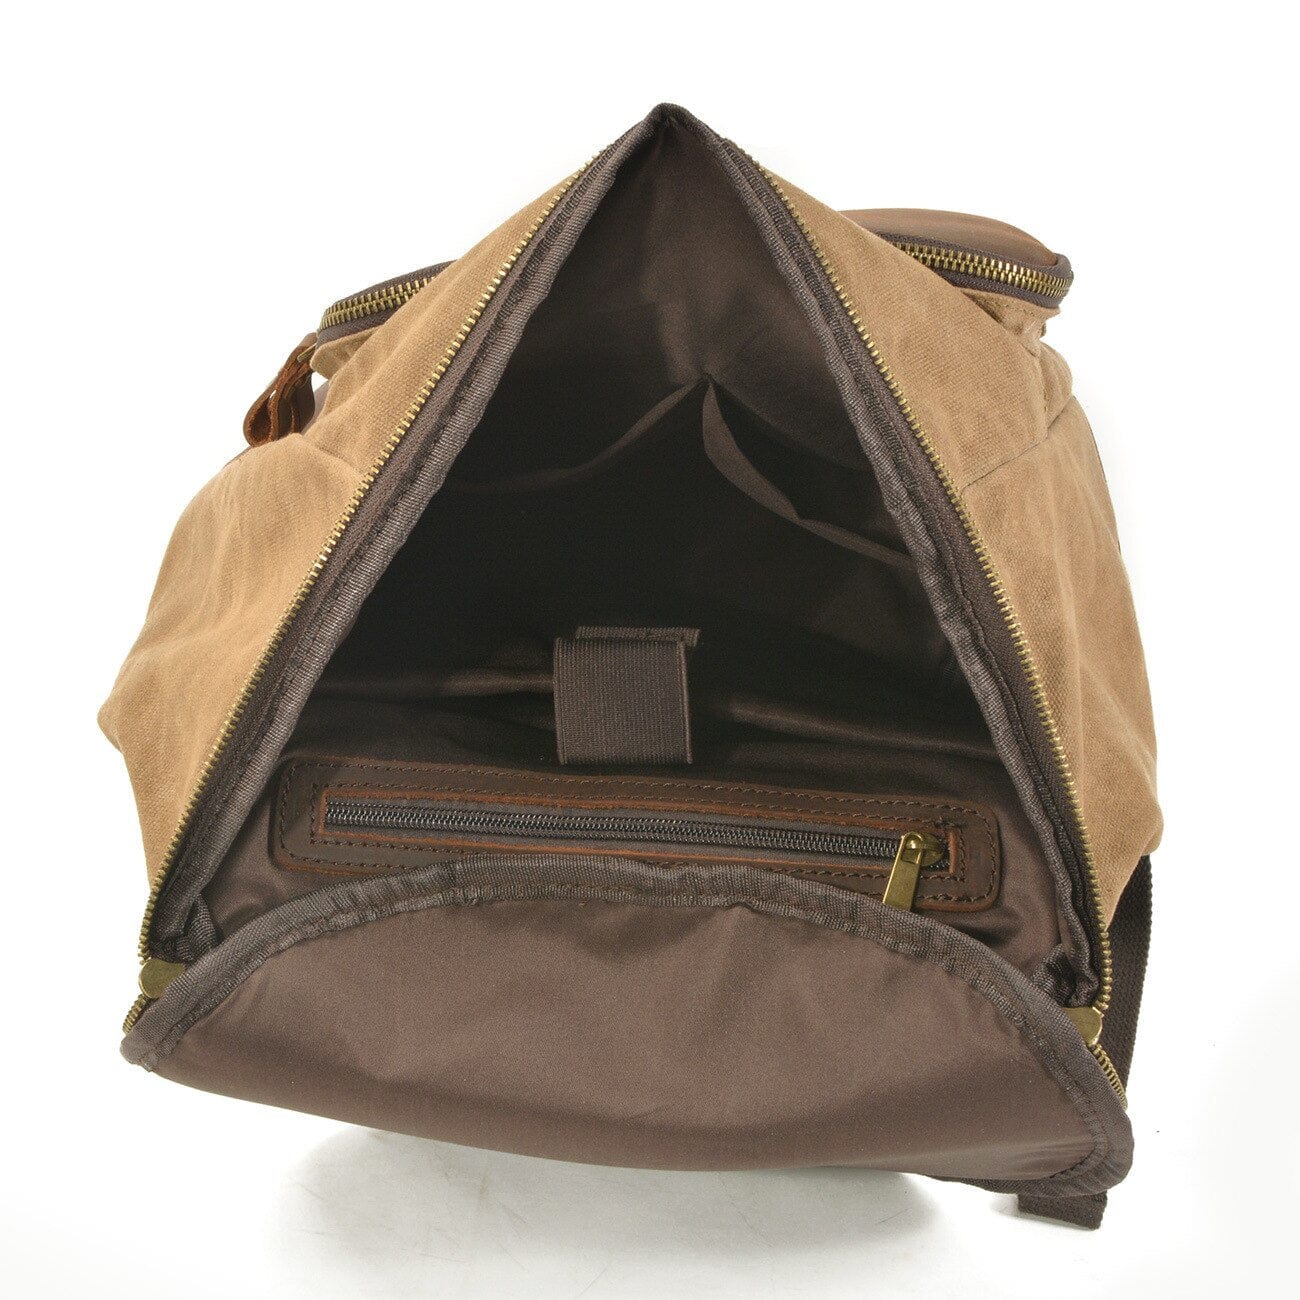 Vintage canvas backpack UK - Gentcreate